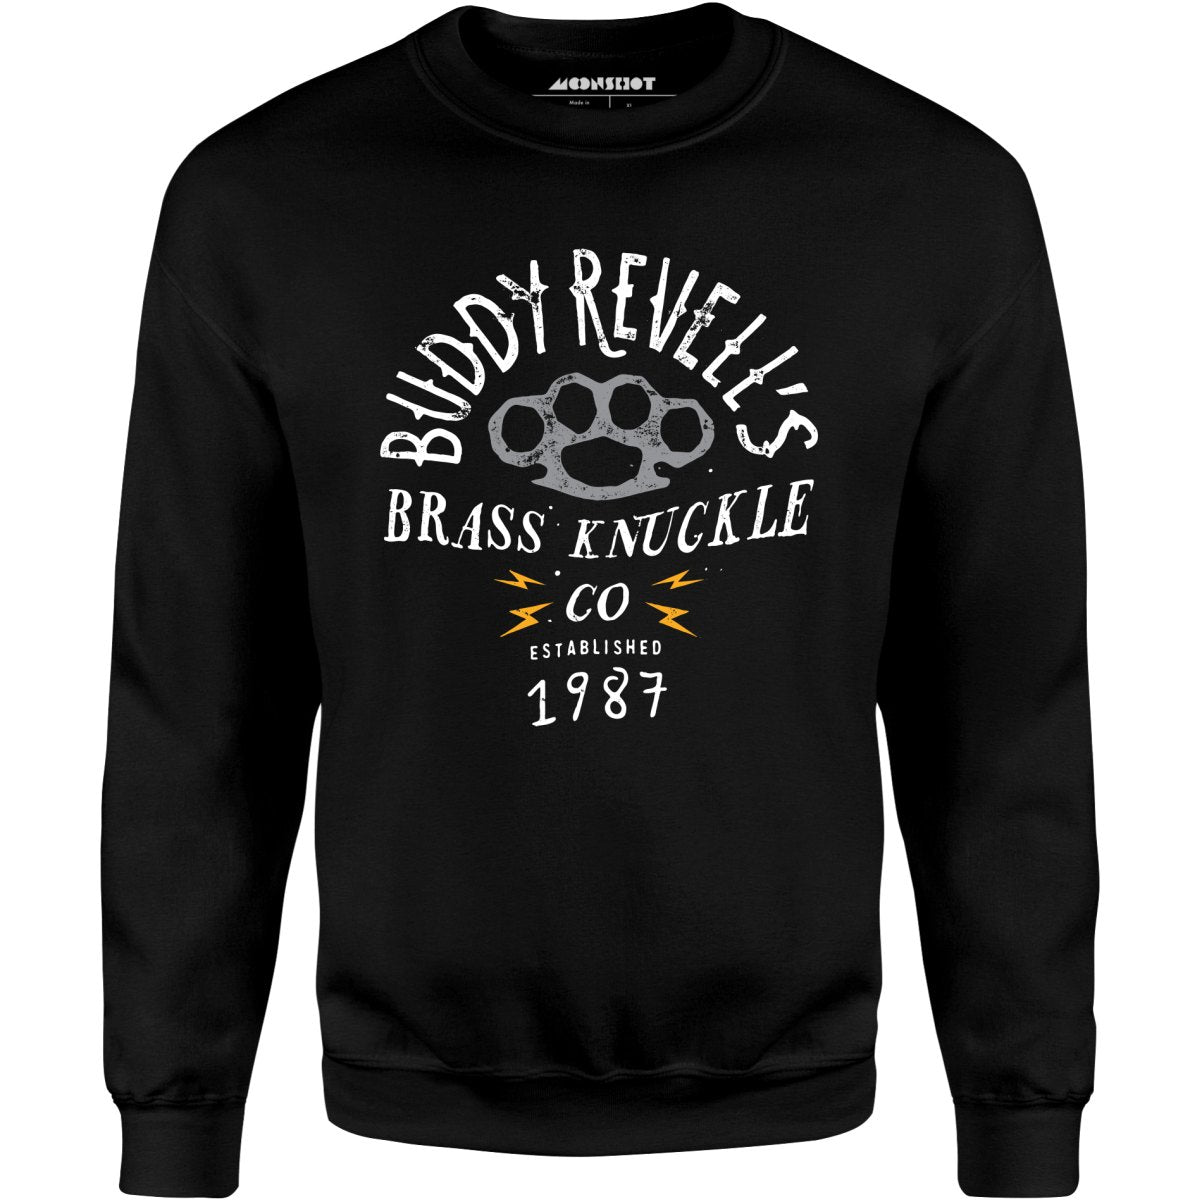 Buddy Revell's Brass Knuckle Co. - Unisex Sweatshirt